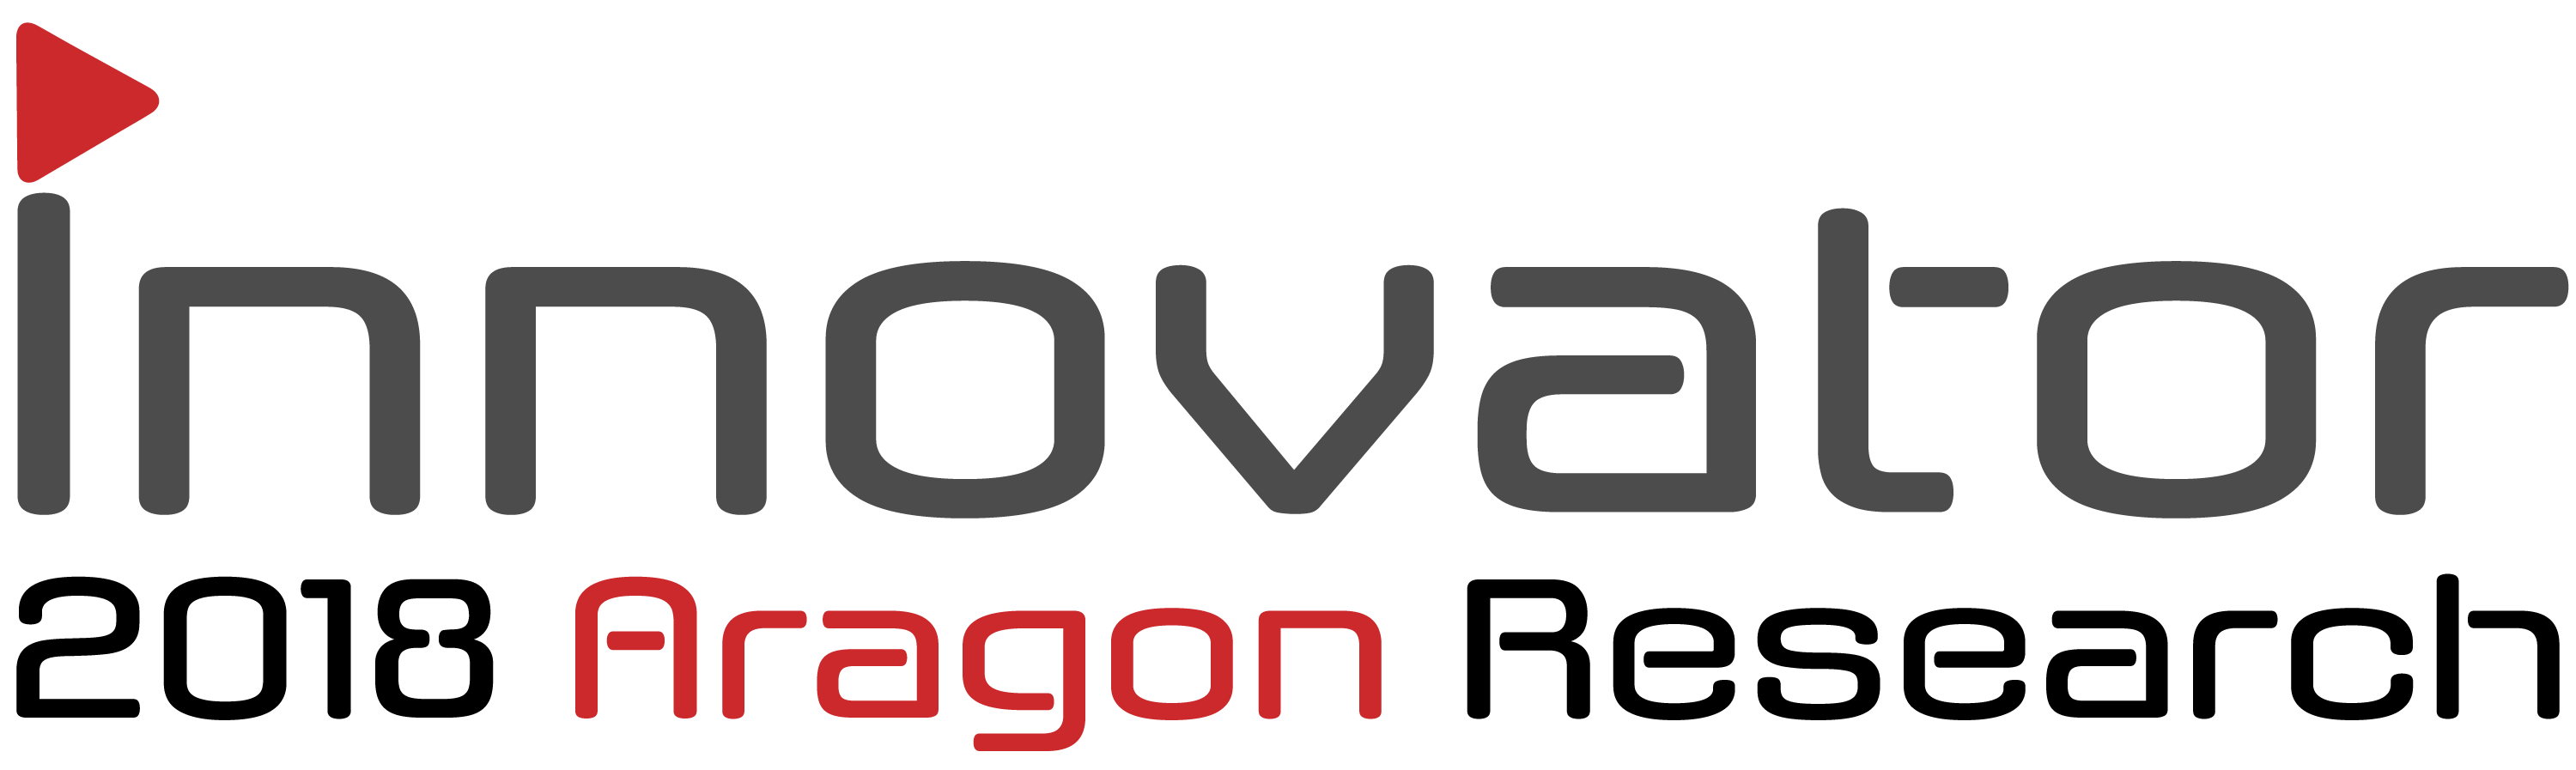 2018 Aragon Research Innovator logo